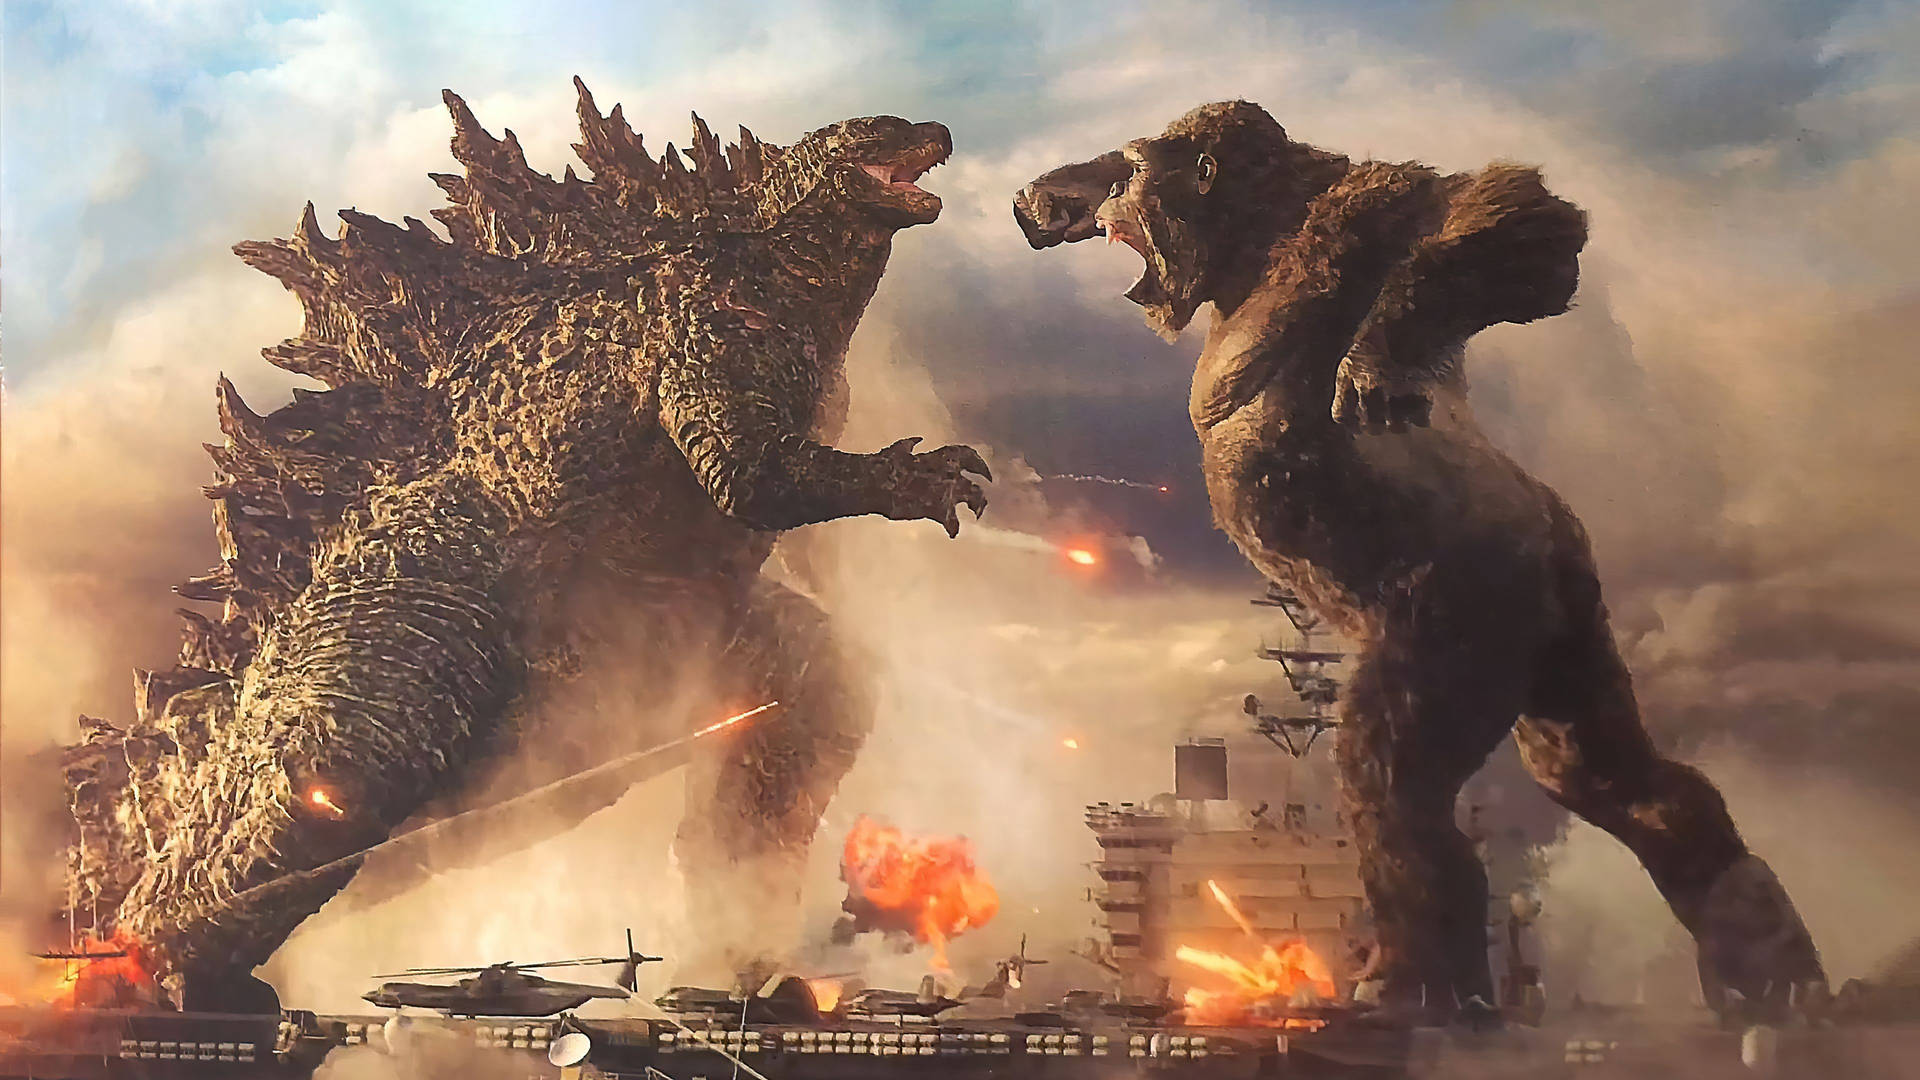 Monsters Battling In Godzilla Vs King Kong